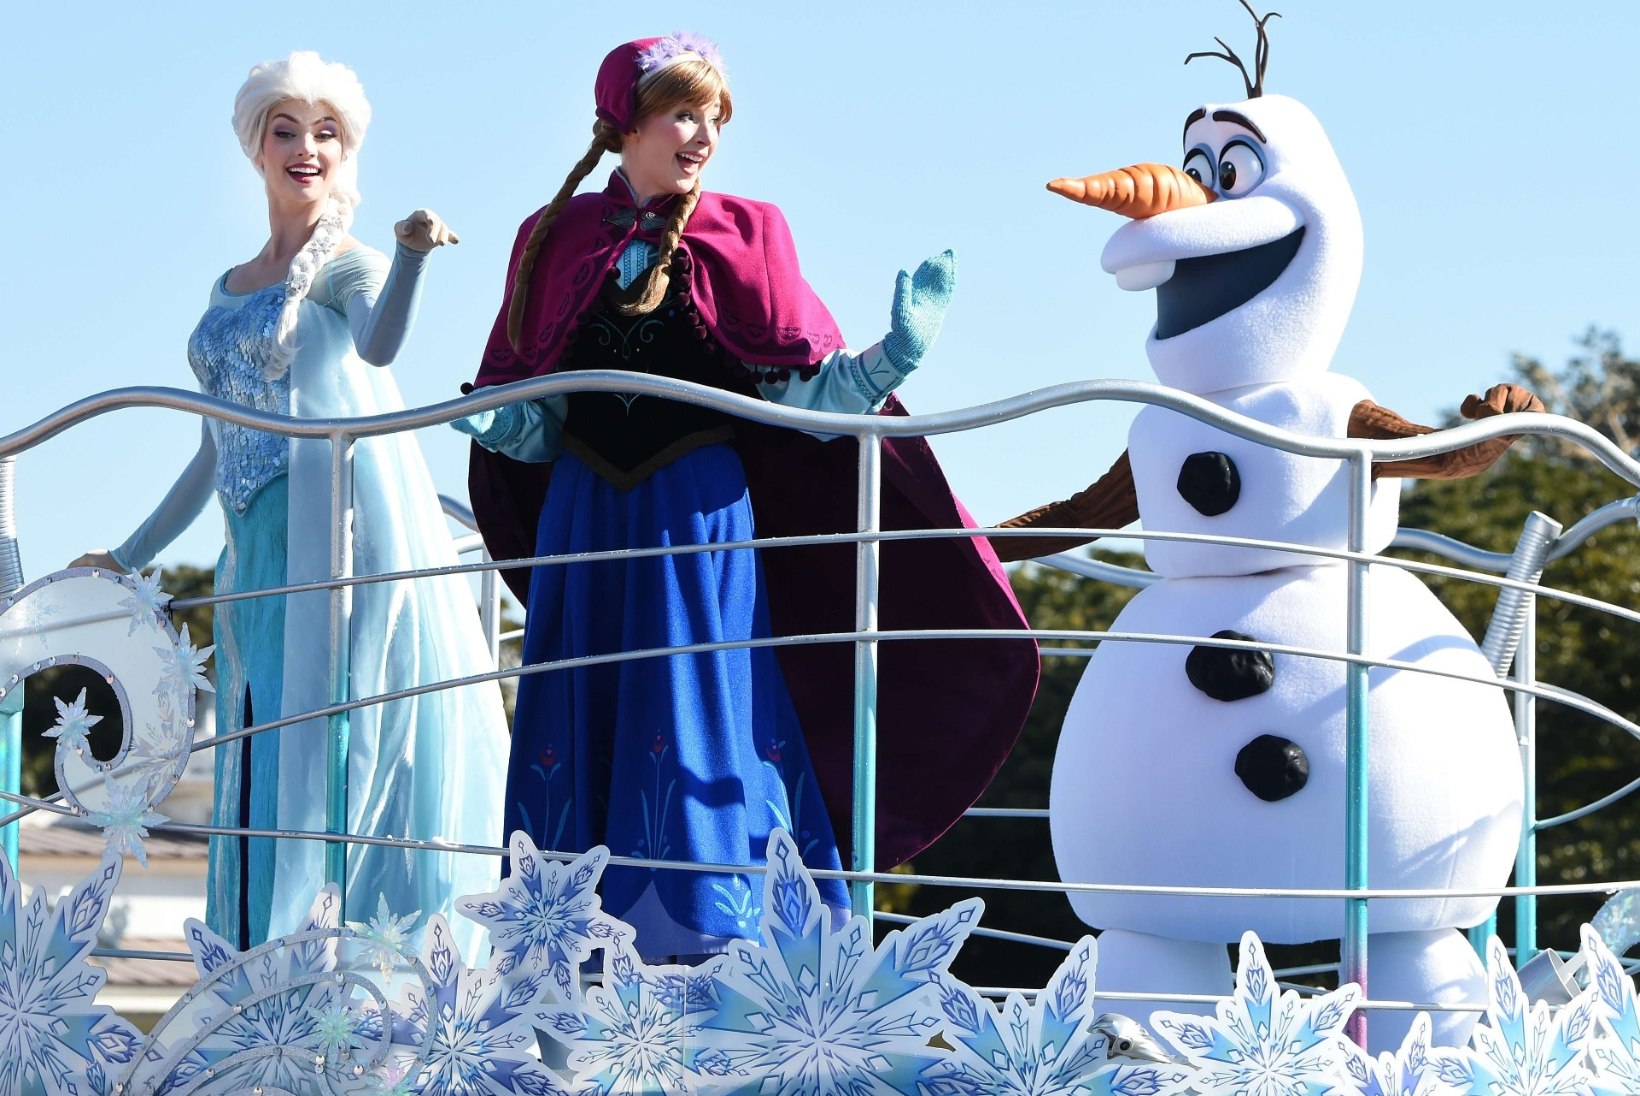 „Frozeni“ muusikali staar pidi ärevushoo tõttu etenduse ära jätma